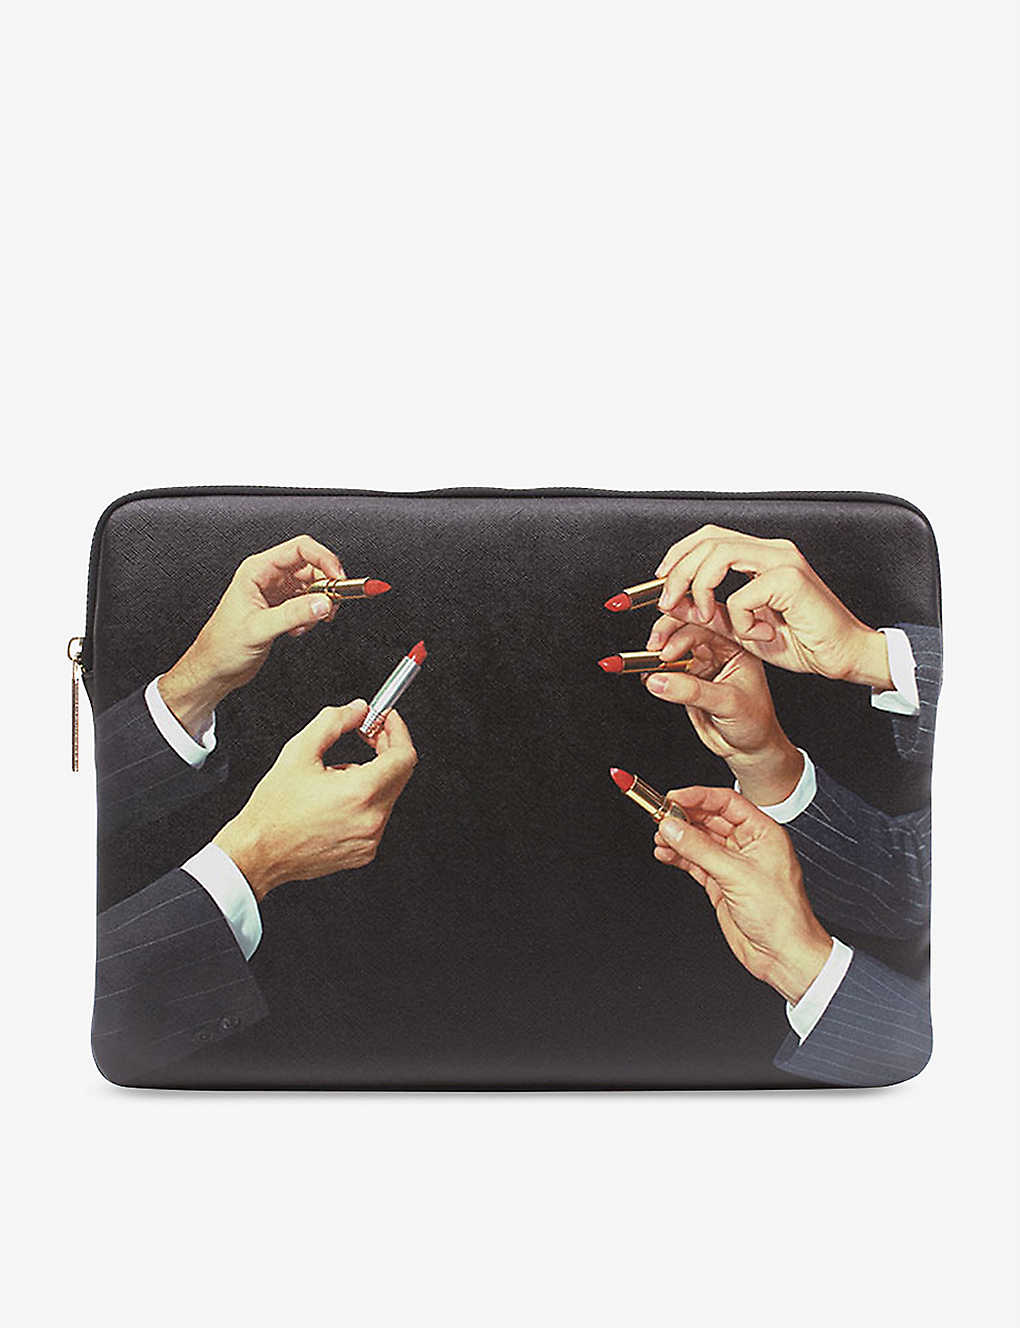 Seletti Wears Toilerpaper Lipstick-print 13” Canvas Laptop Case 34cm X 25cm